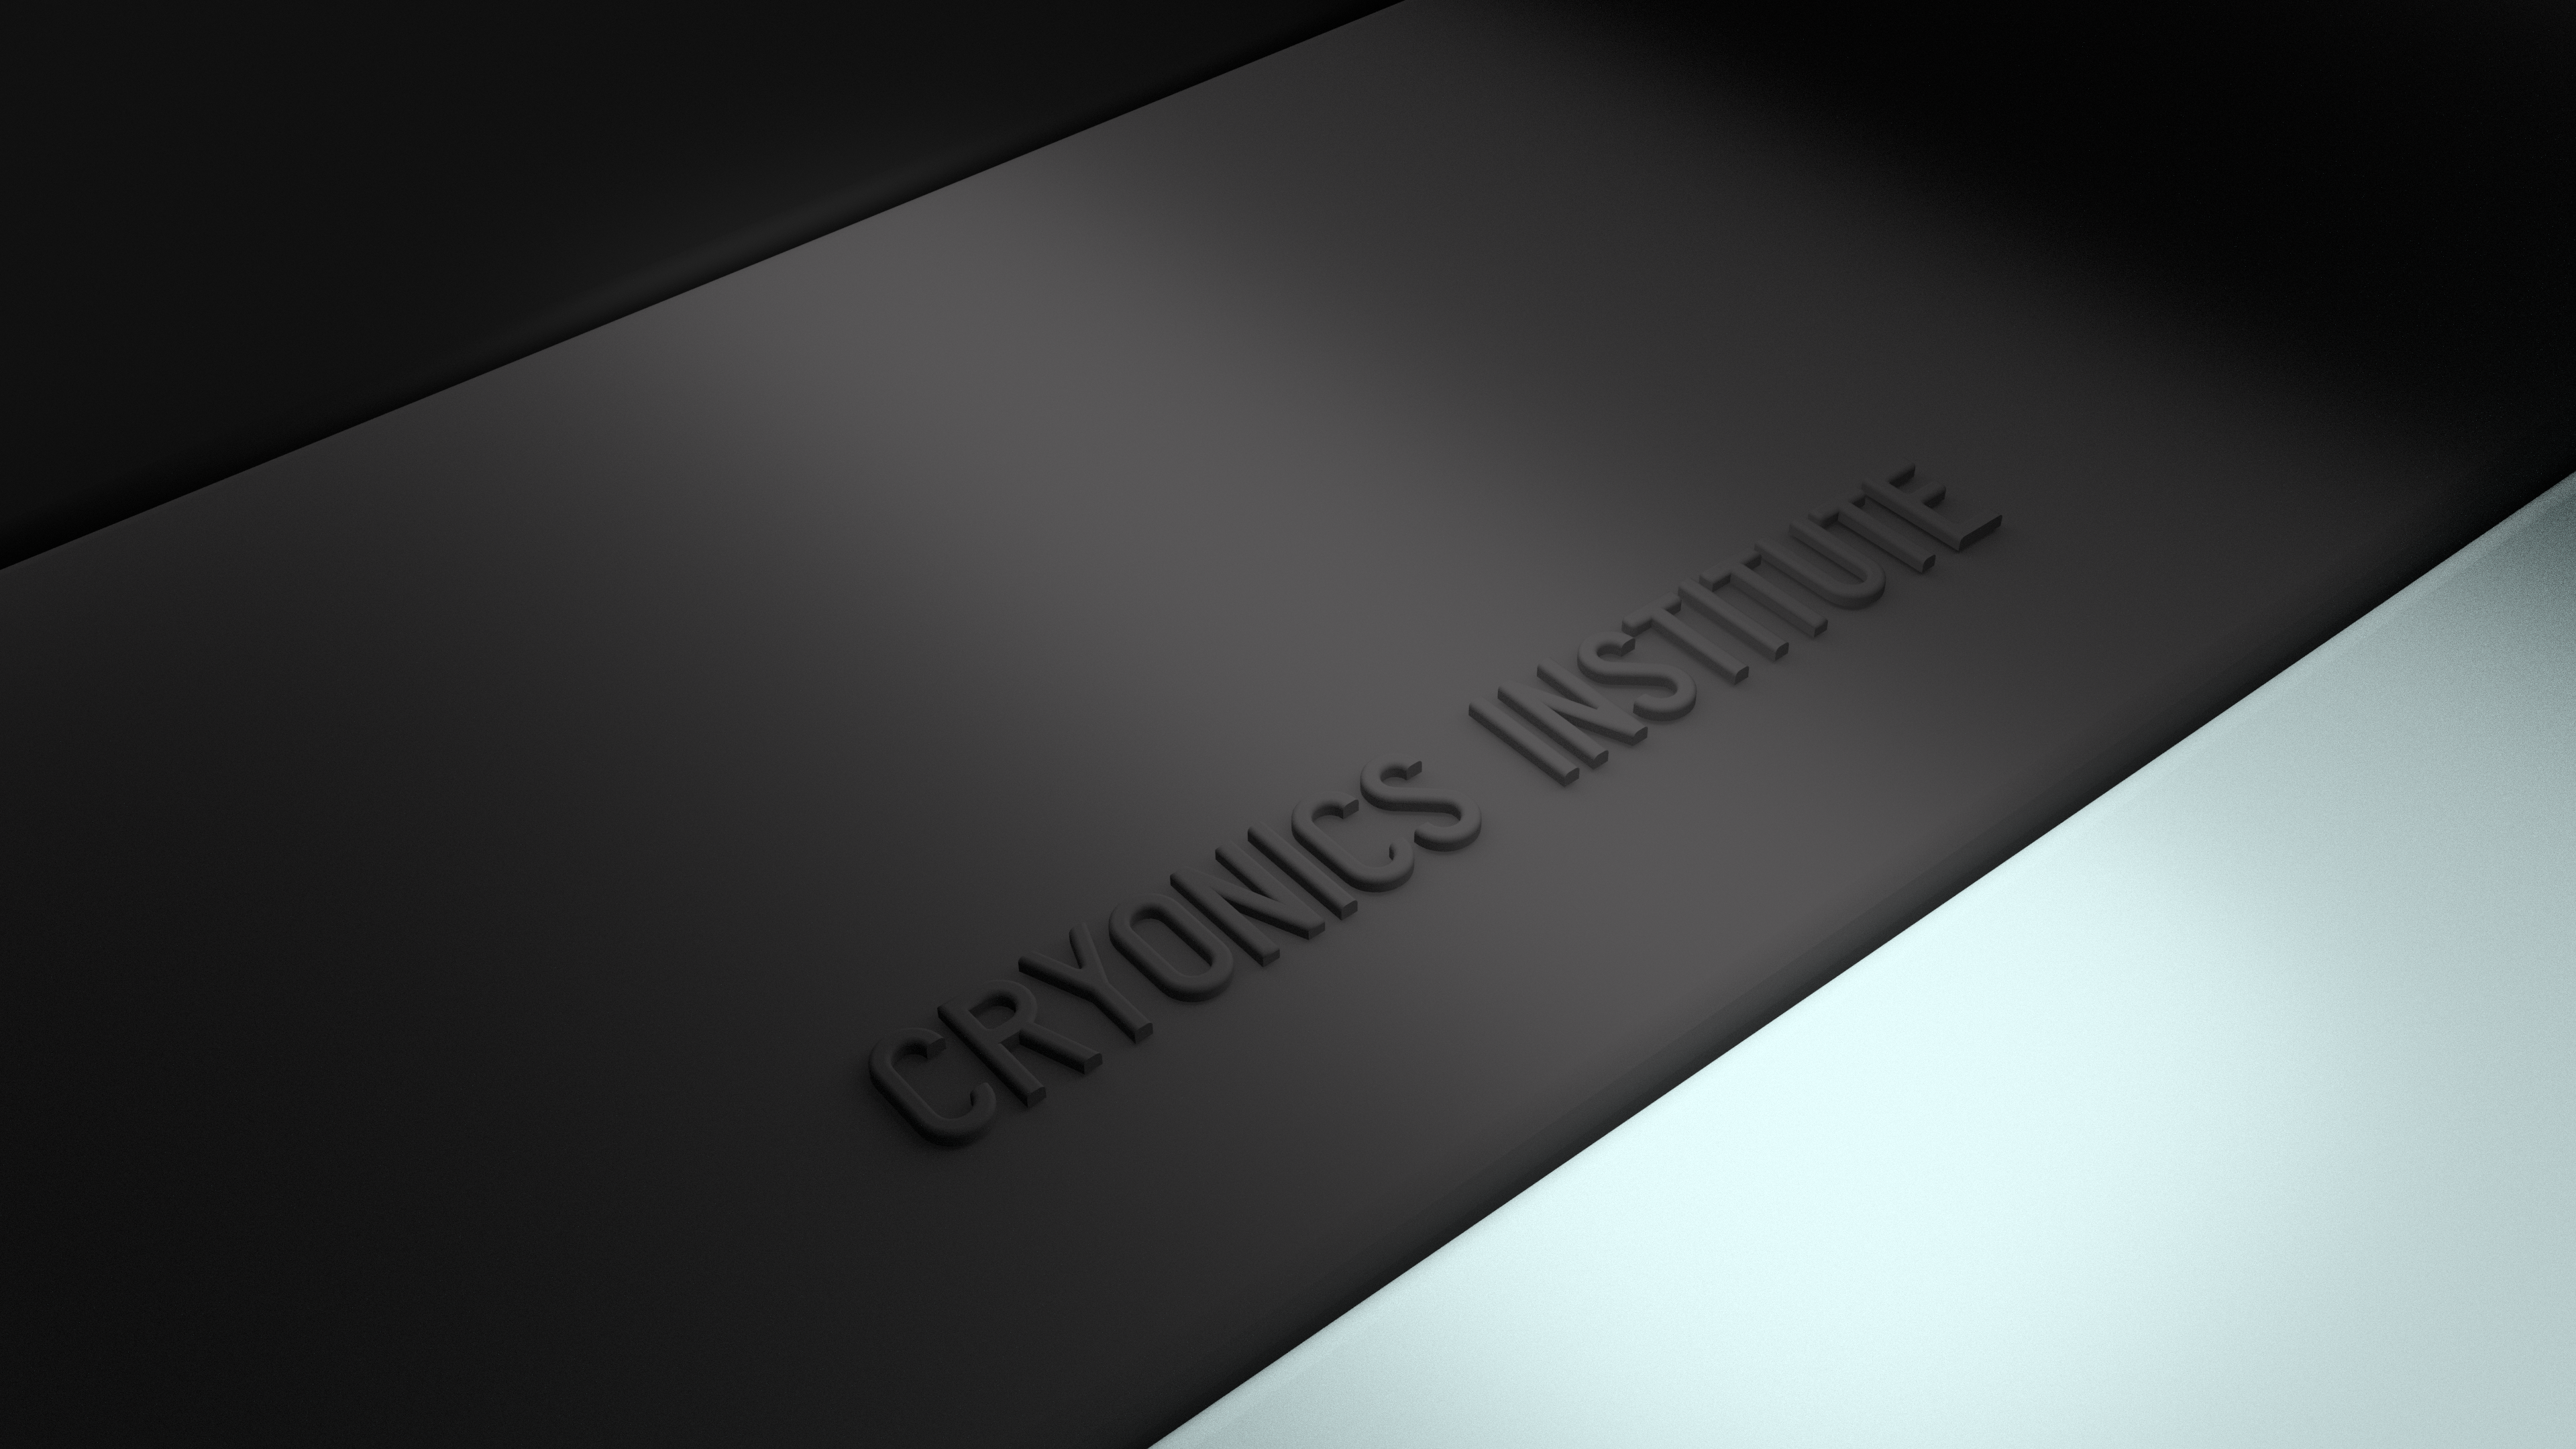 General 3840x2160 Cryonics Cryonics Institute digital art black